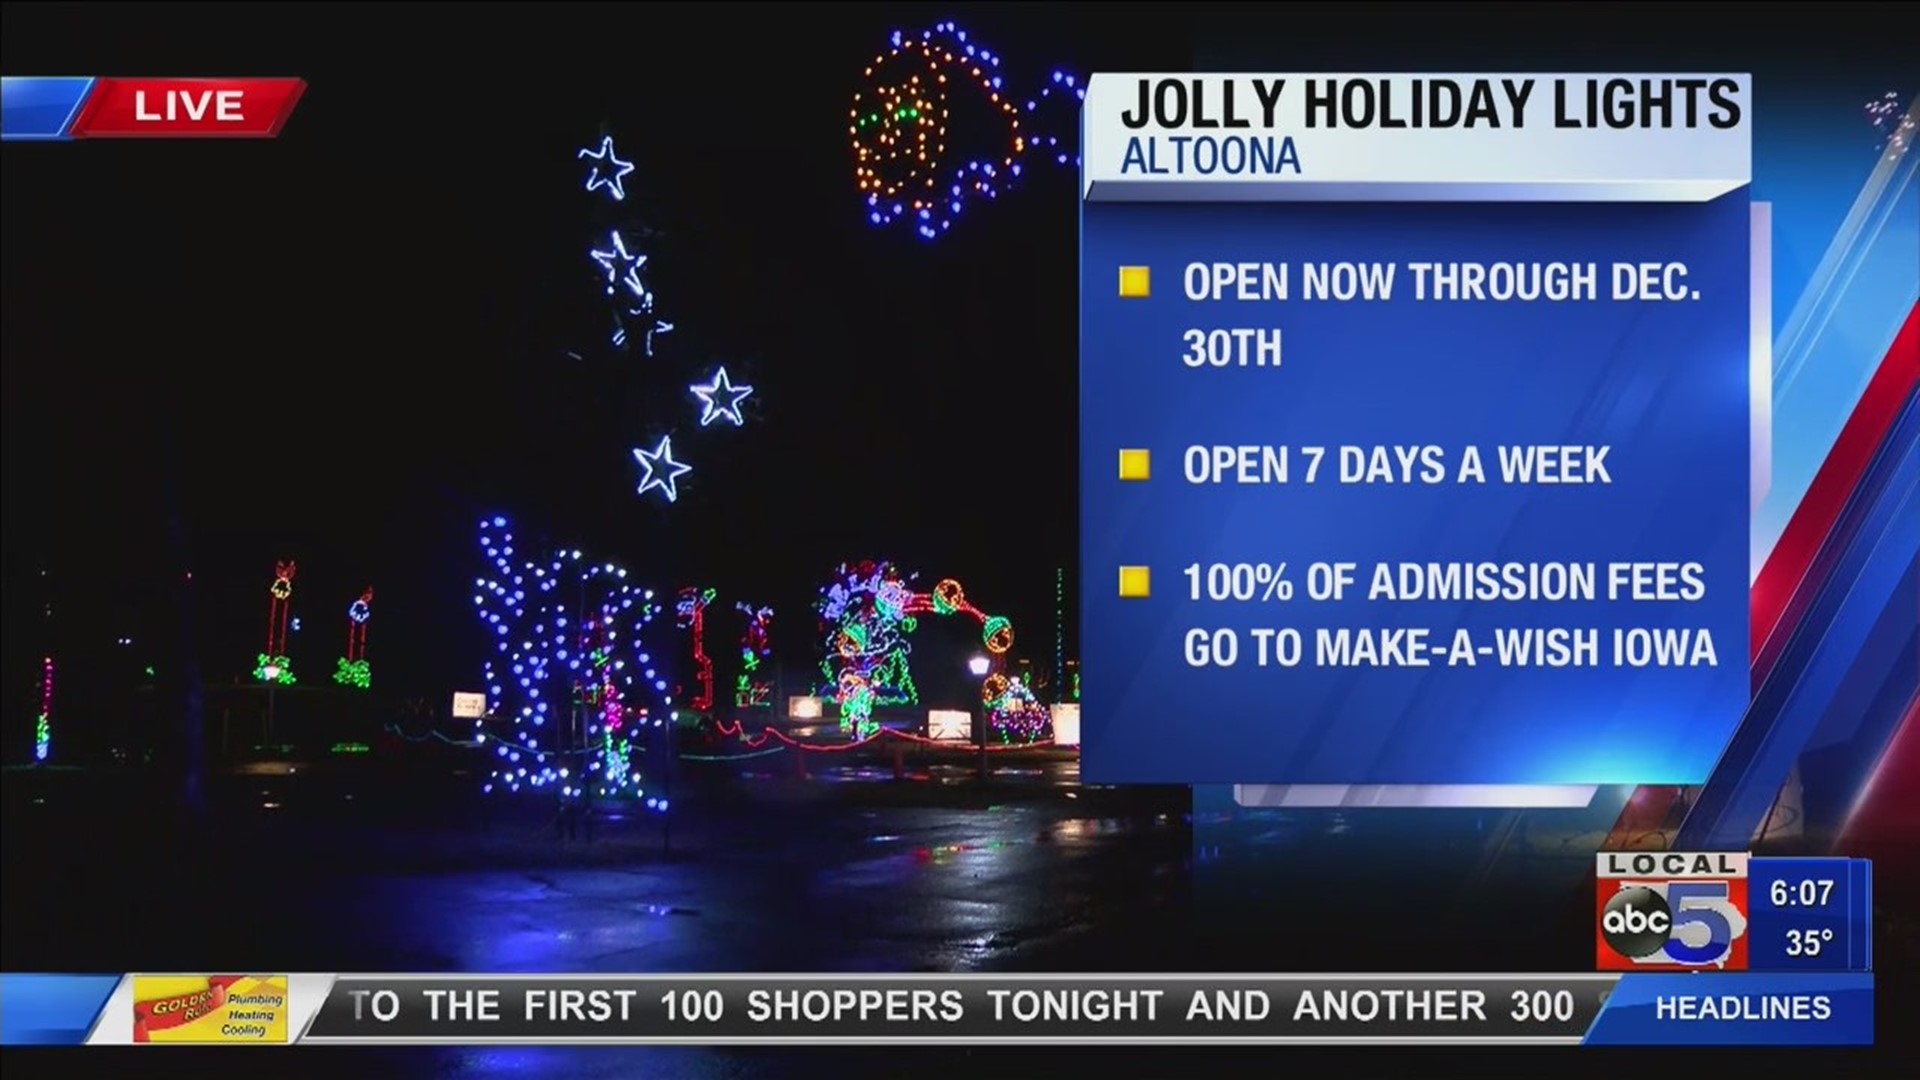 Jolly Holiday Lights lighting up the season